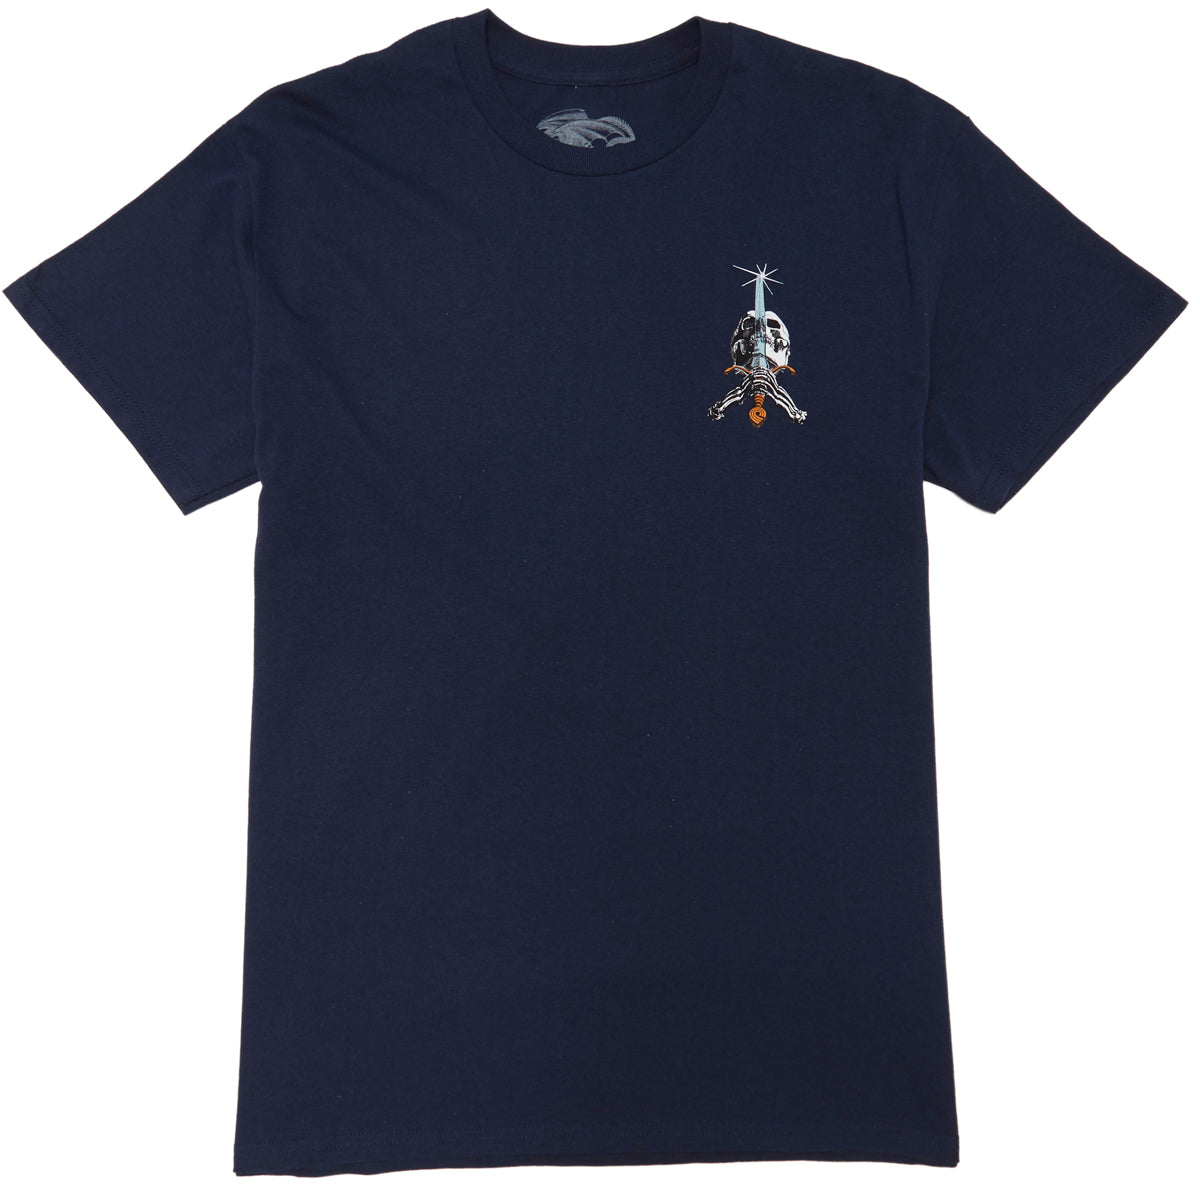 Powell-Peralta Skull And Sword T-Shirt - Navy image 2